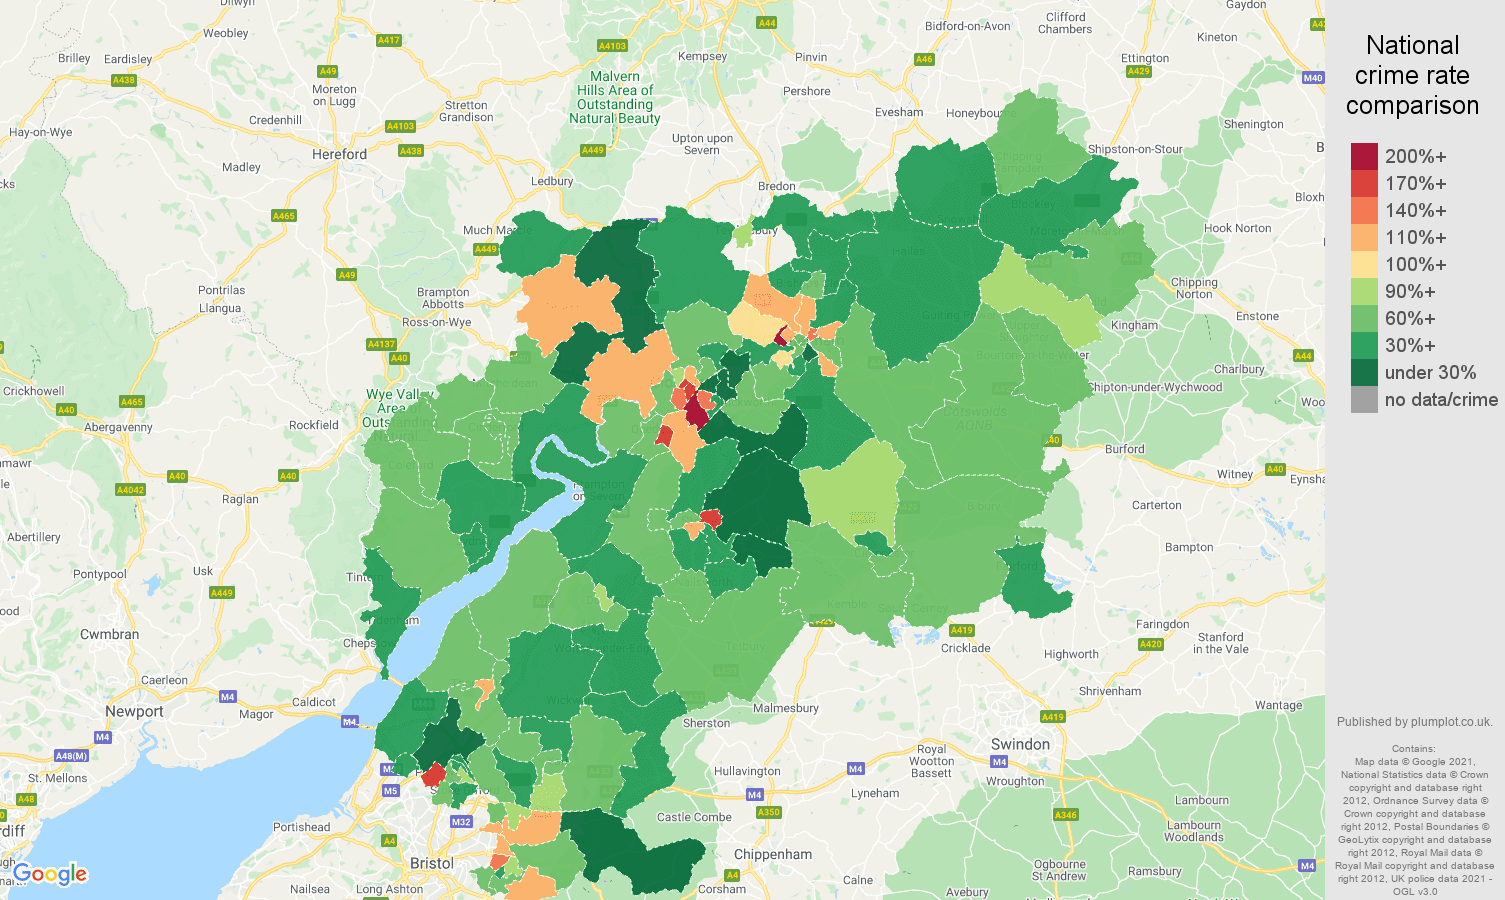 Gloucestershire criminal damage and arson crime rate comparison map